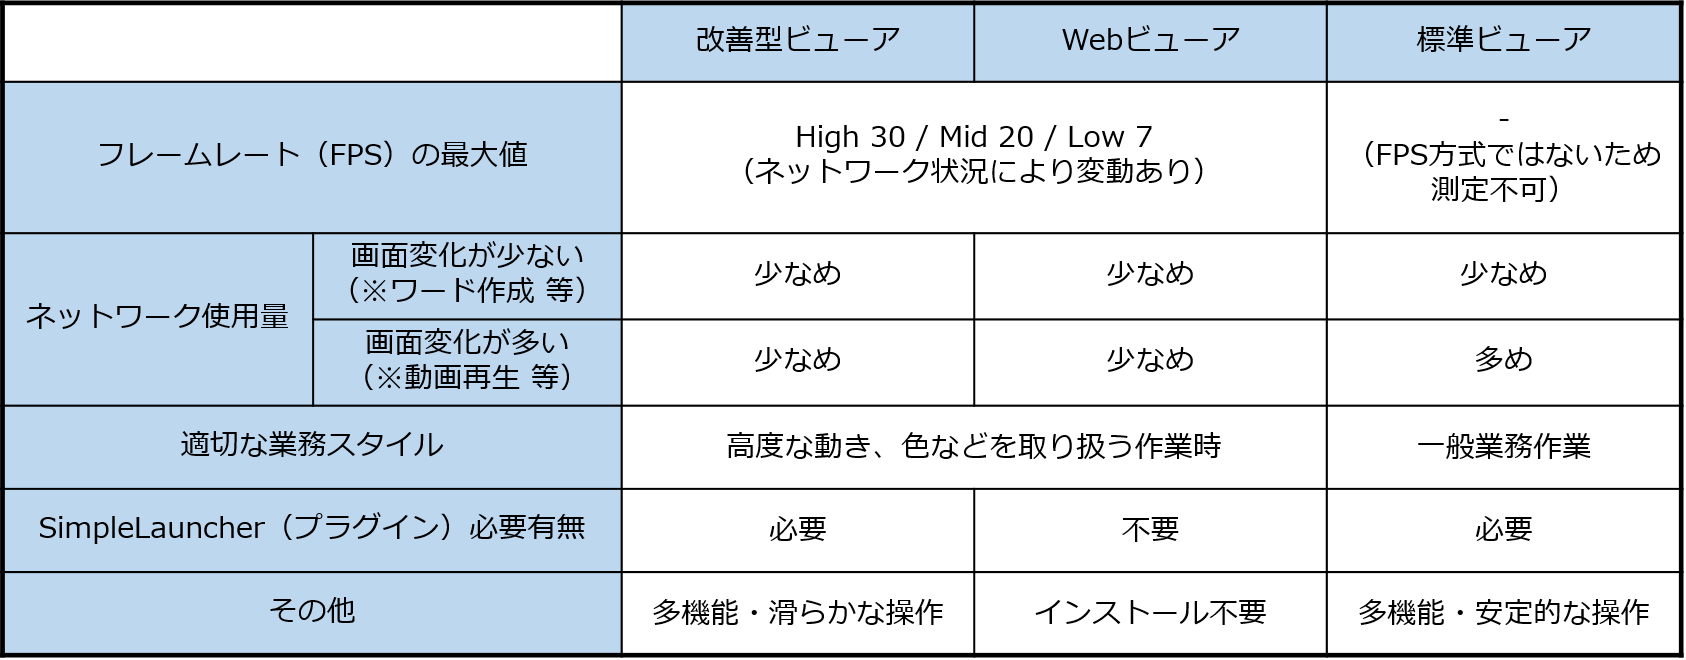 Web_vs___2.png